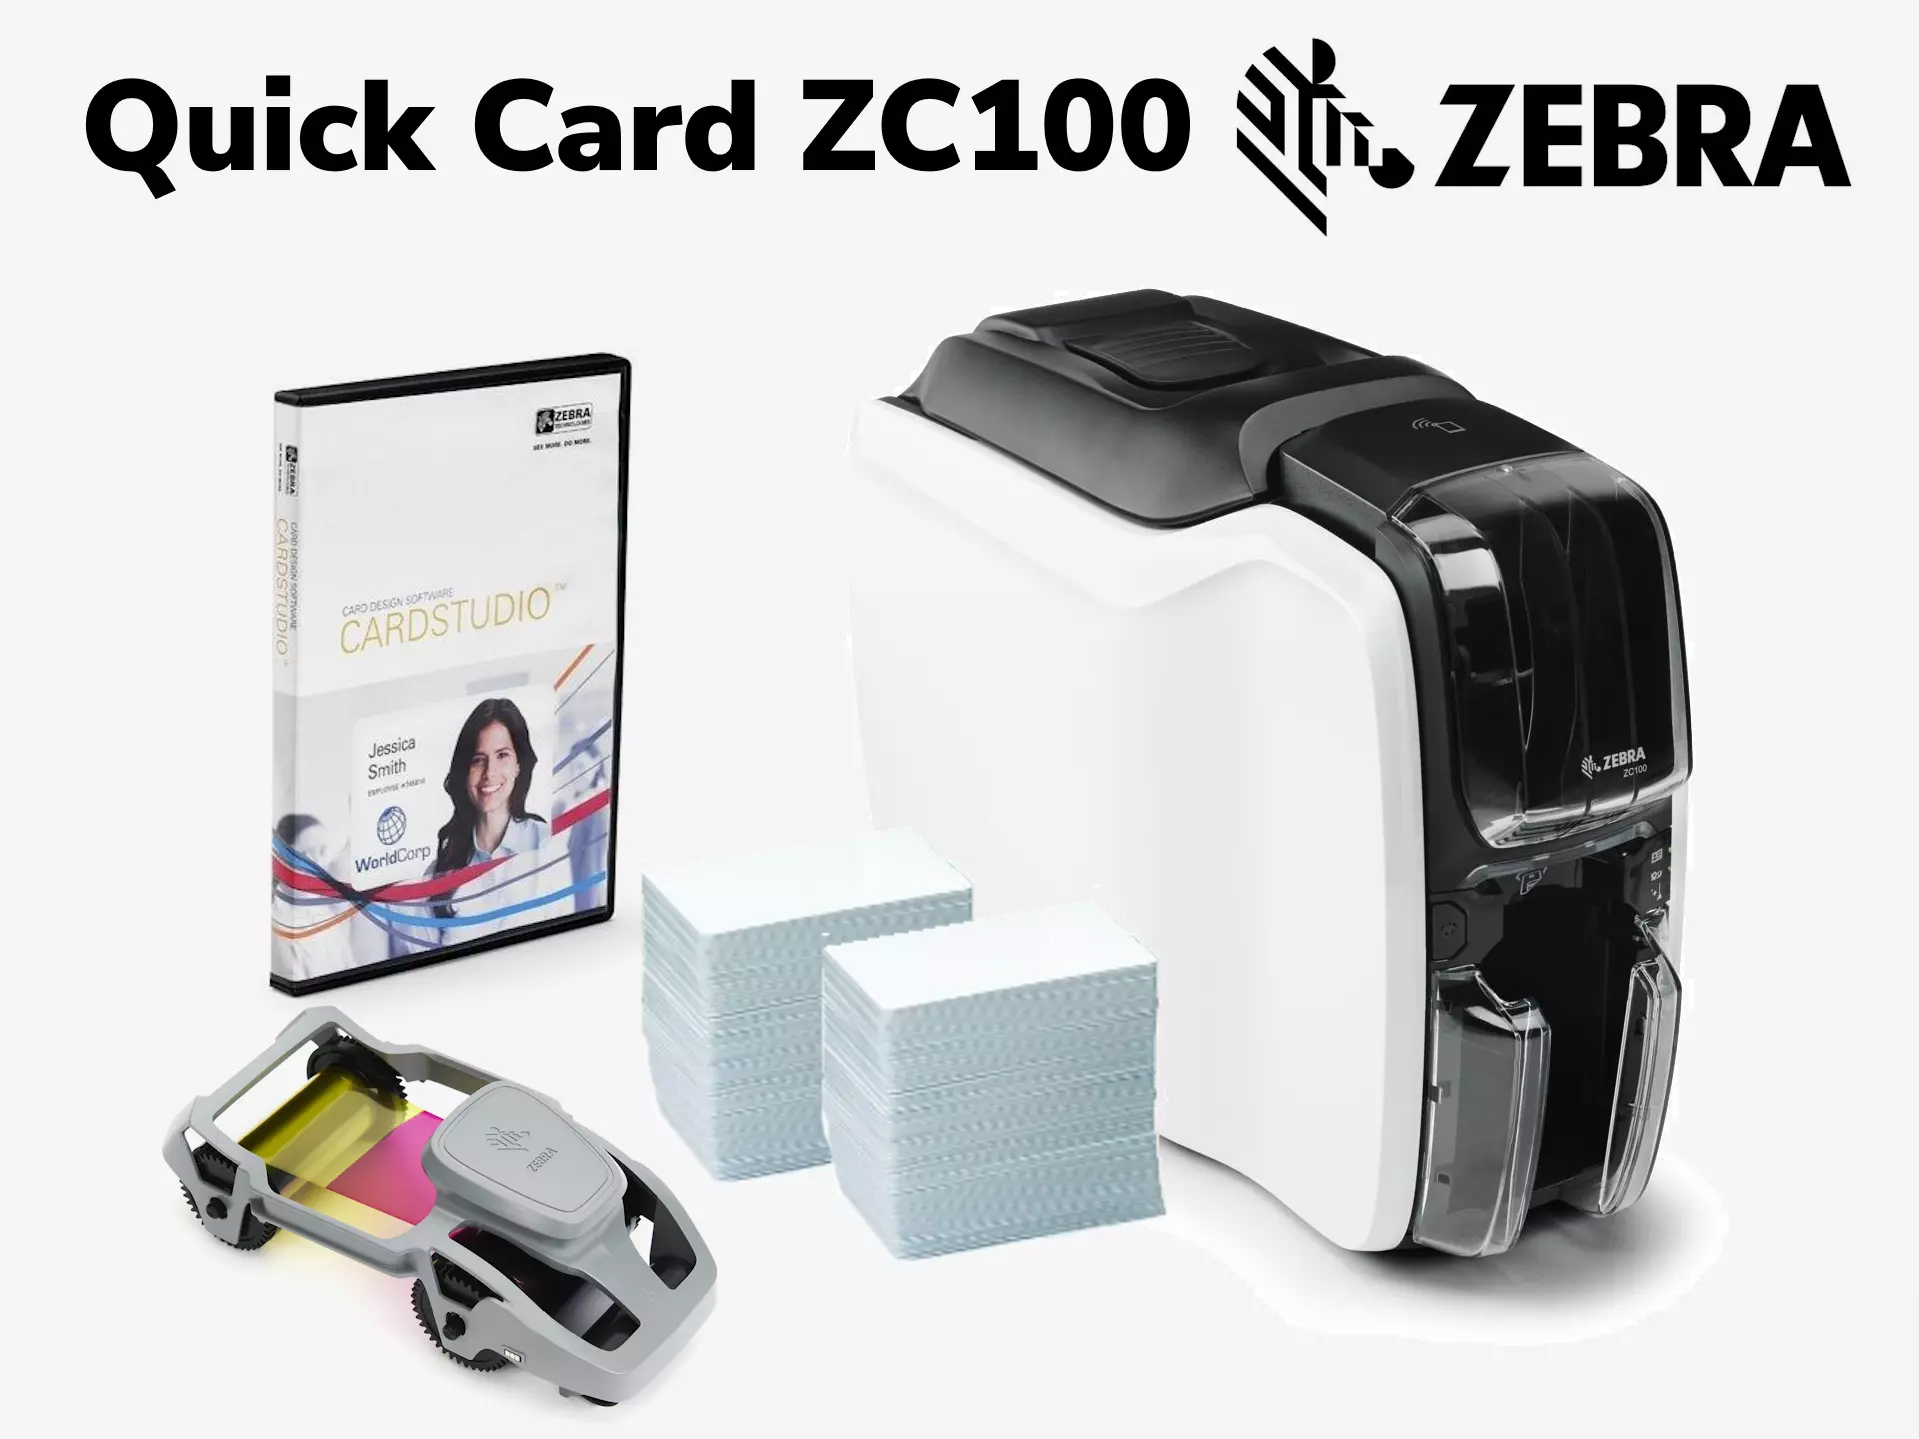 Quick card ZC100 - Promociones